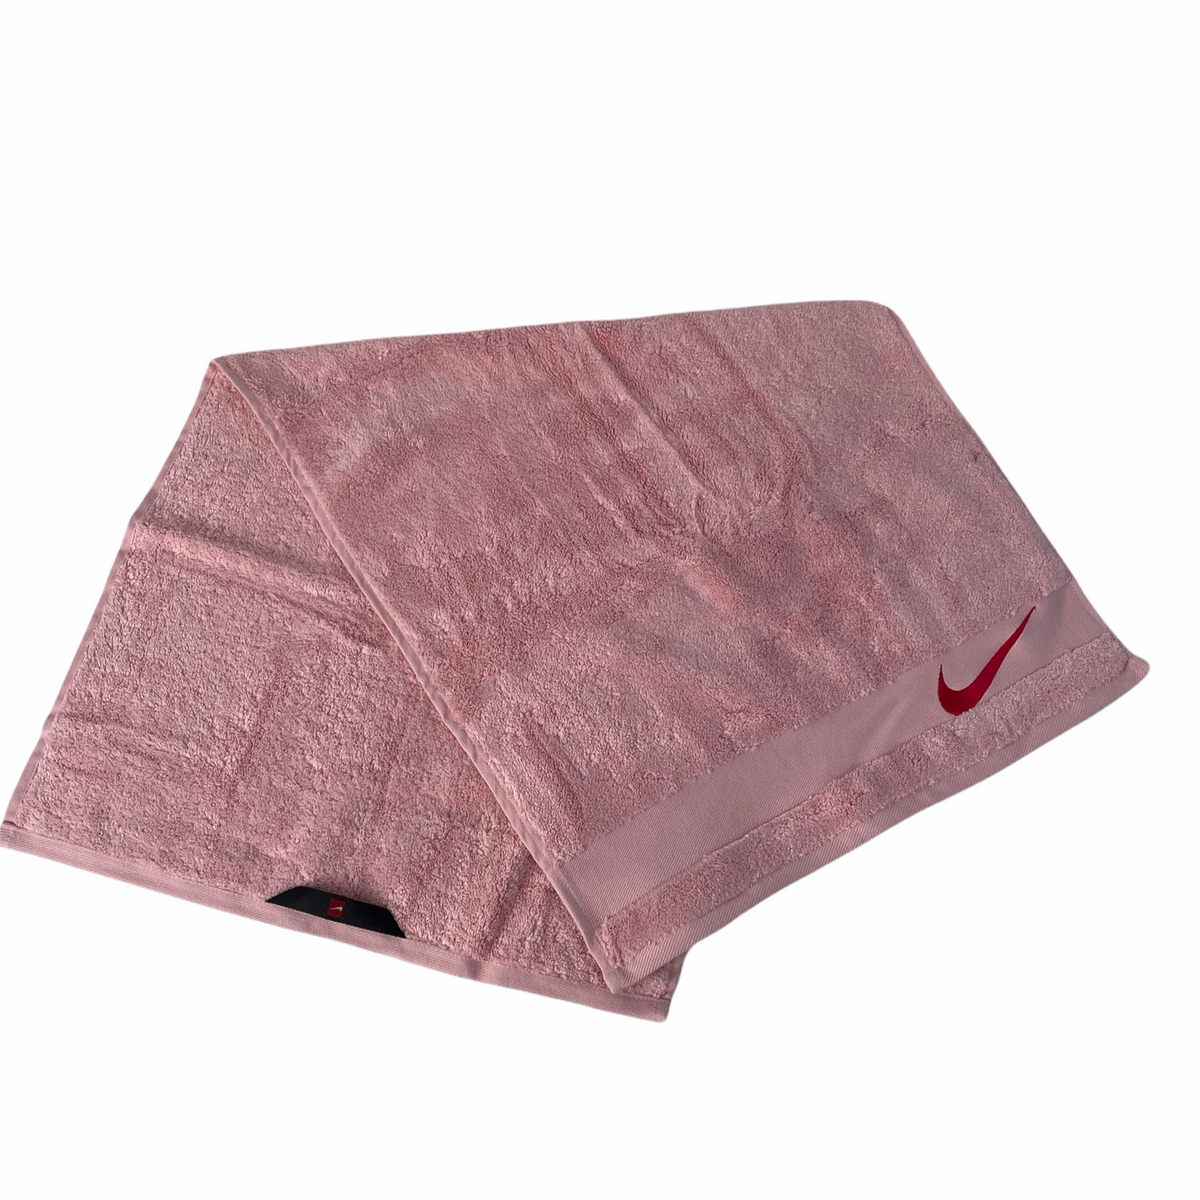 Nike Medium Fundamental Sports Fitness Gym Beach Holiday Towel 35cm x 80cm Black - Not In Your Wardrobe™ - [Vendor]